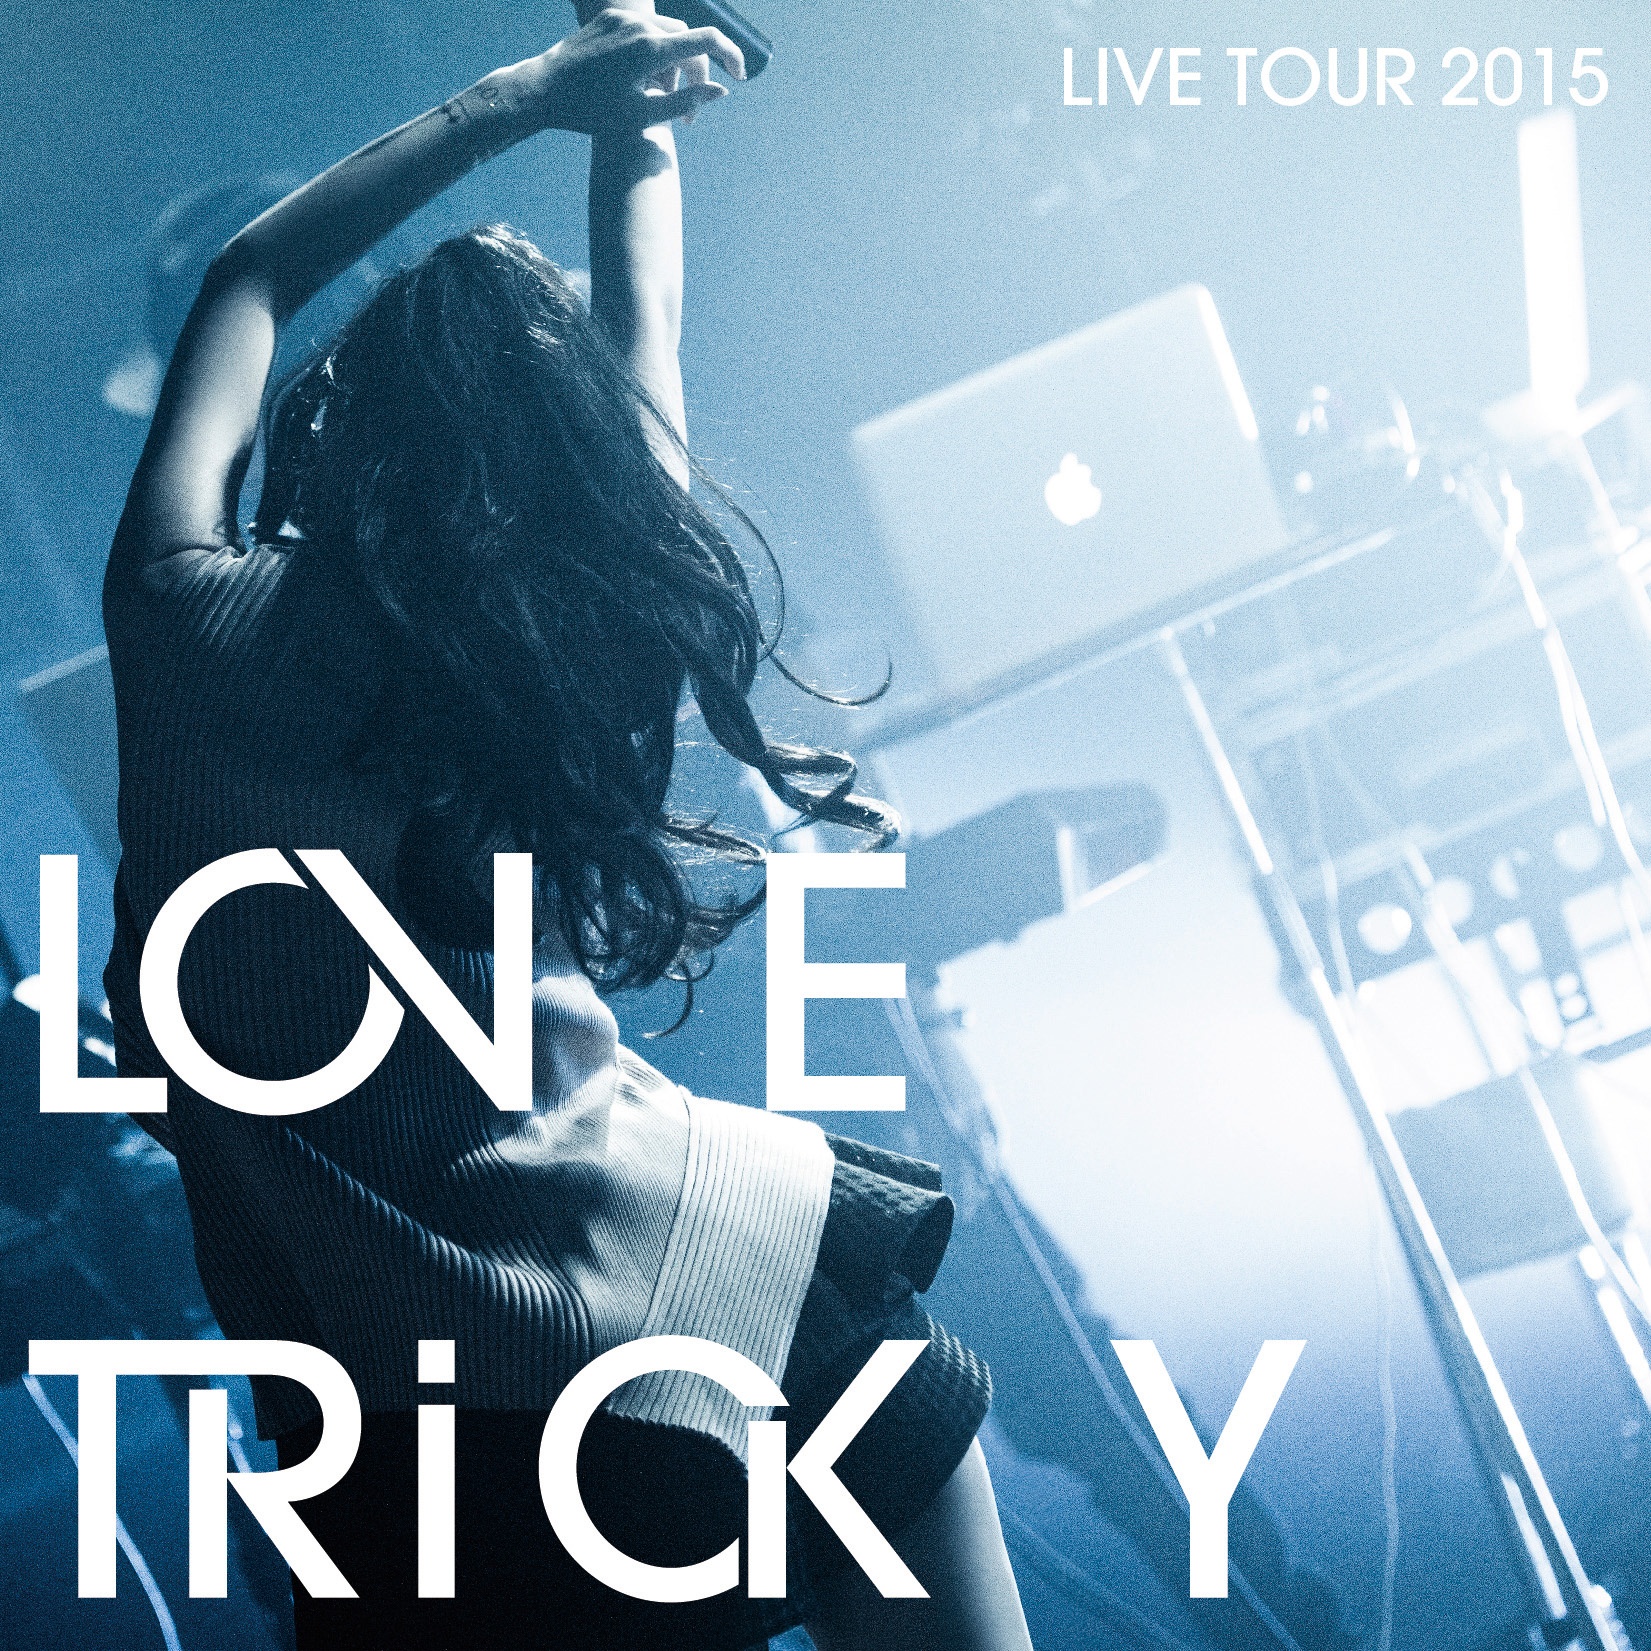 reach for the moon LOVE TRiCKY LIVE TOUR 2015 ti zhong jian